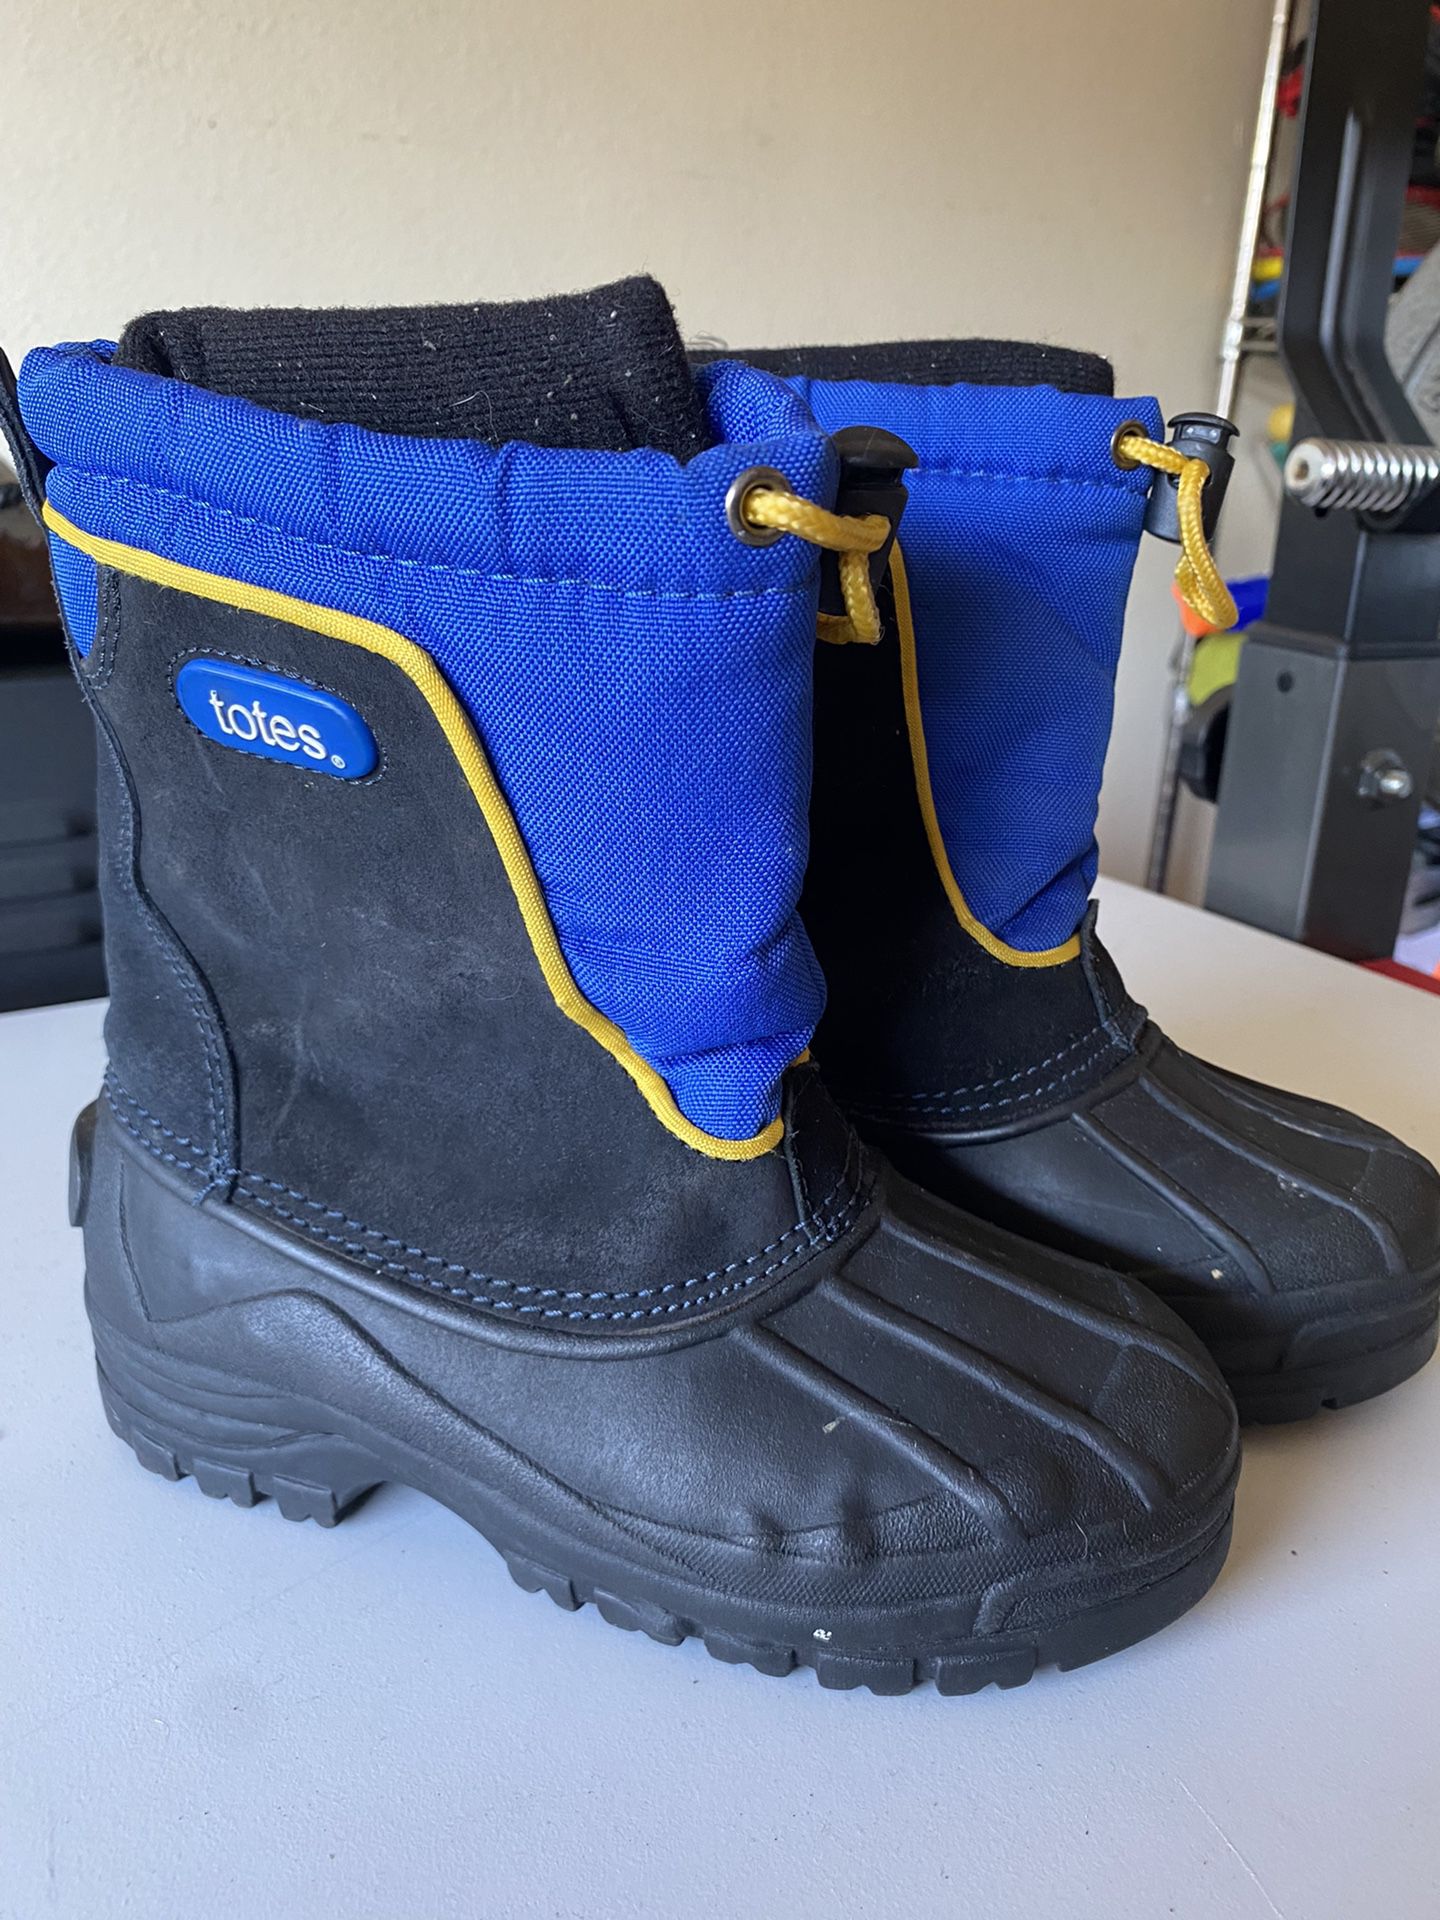 Kids Winter Snow Boots Size 13 M